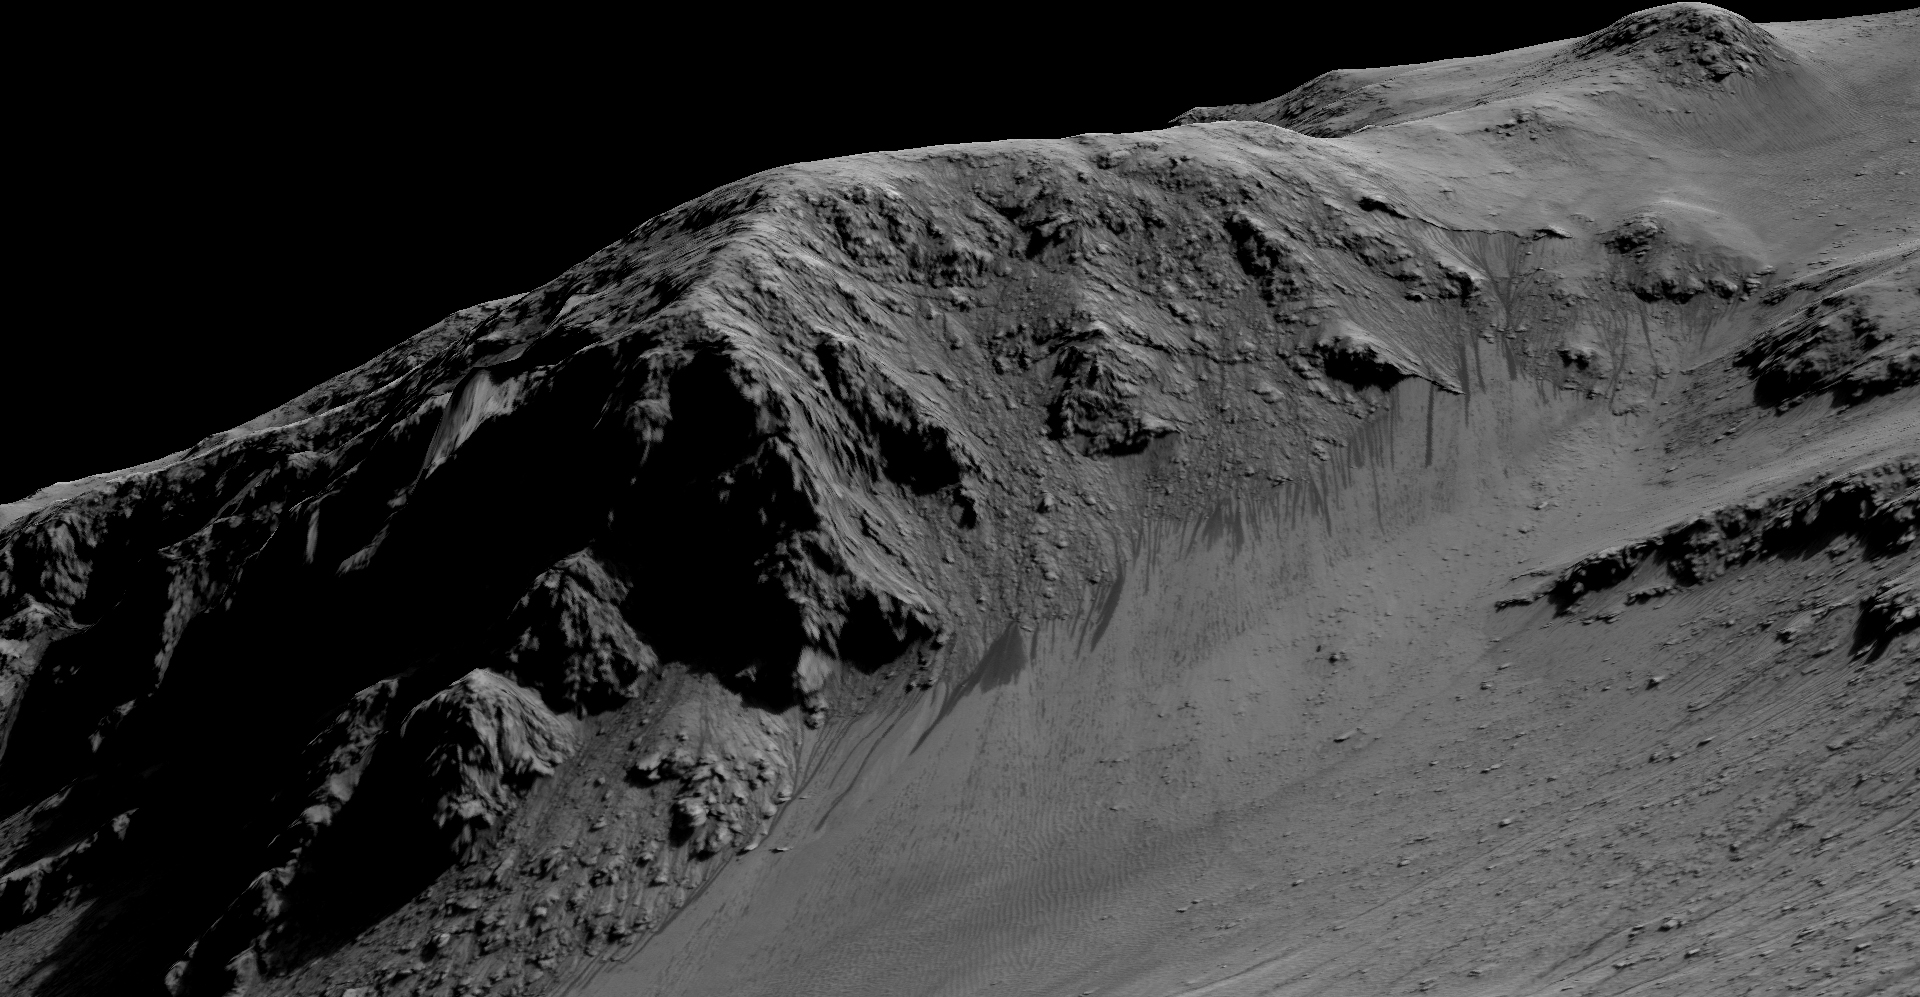 RSL on slopes in Horowitz crater. Image Credit: NASA/JPL-Caltech/University of Arizona